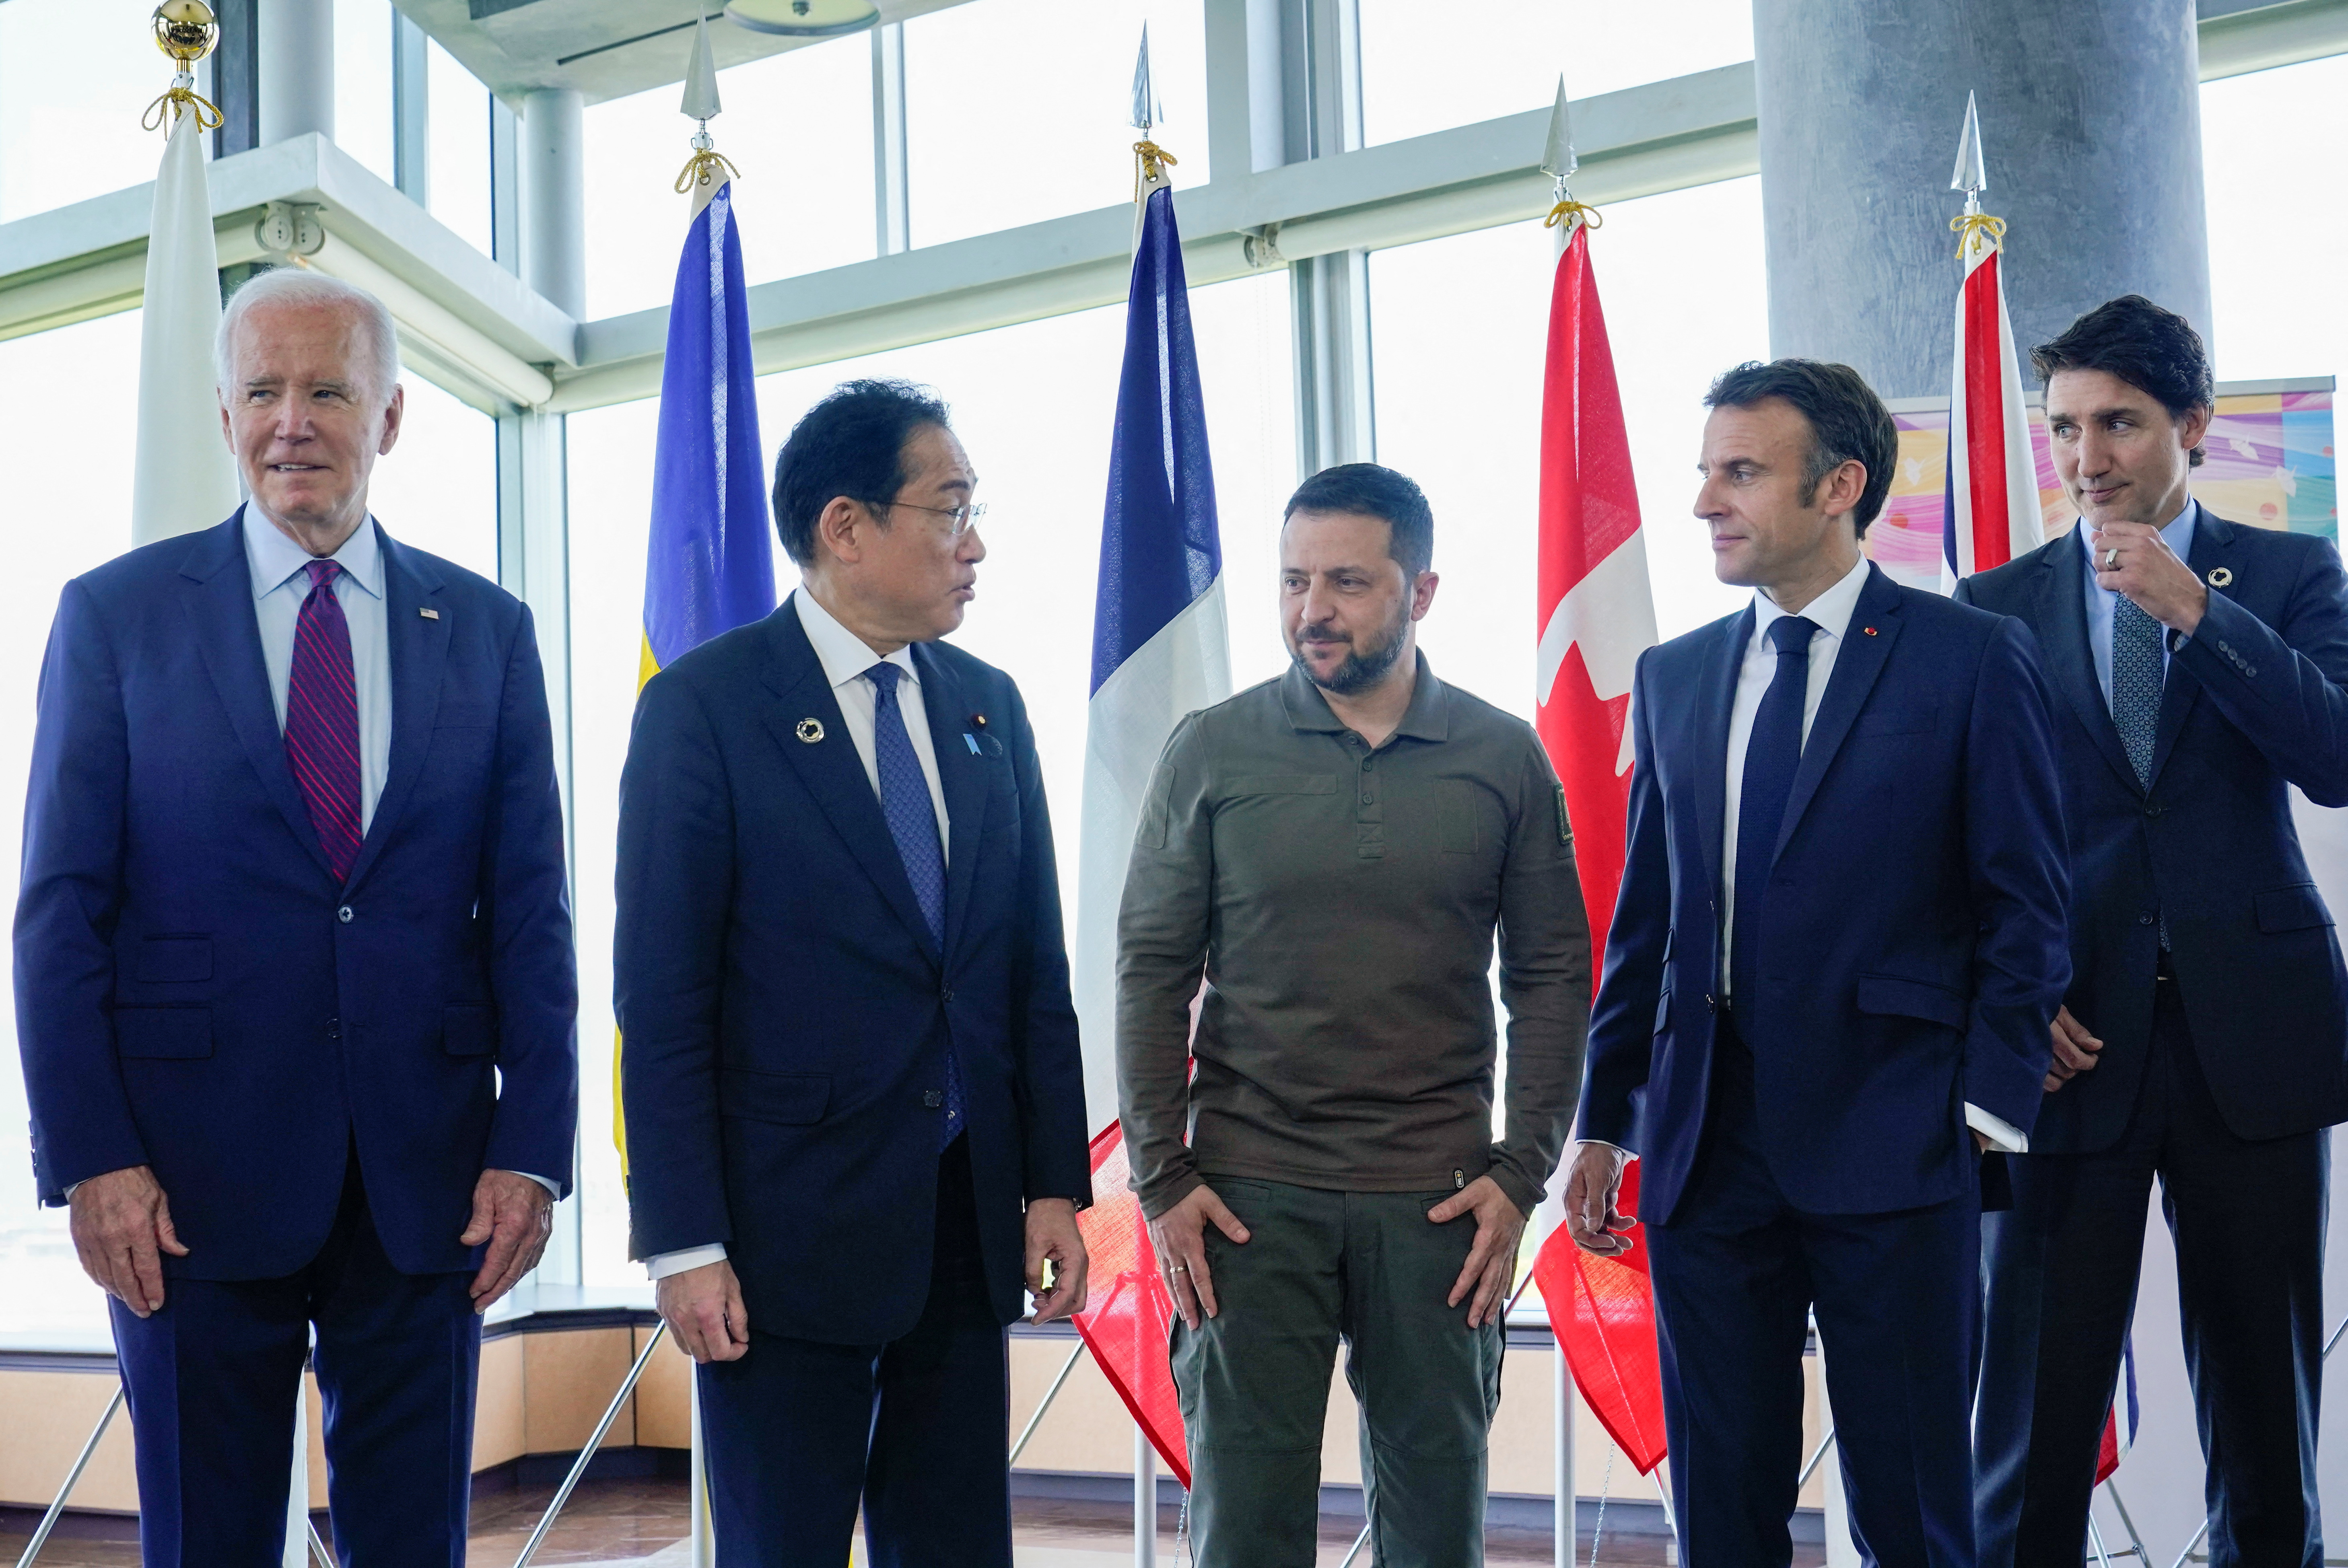 Los líderes del G7 se reúnen con Zelensky para discutir el apoyo militar a Ucrania. (REUTERS)